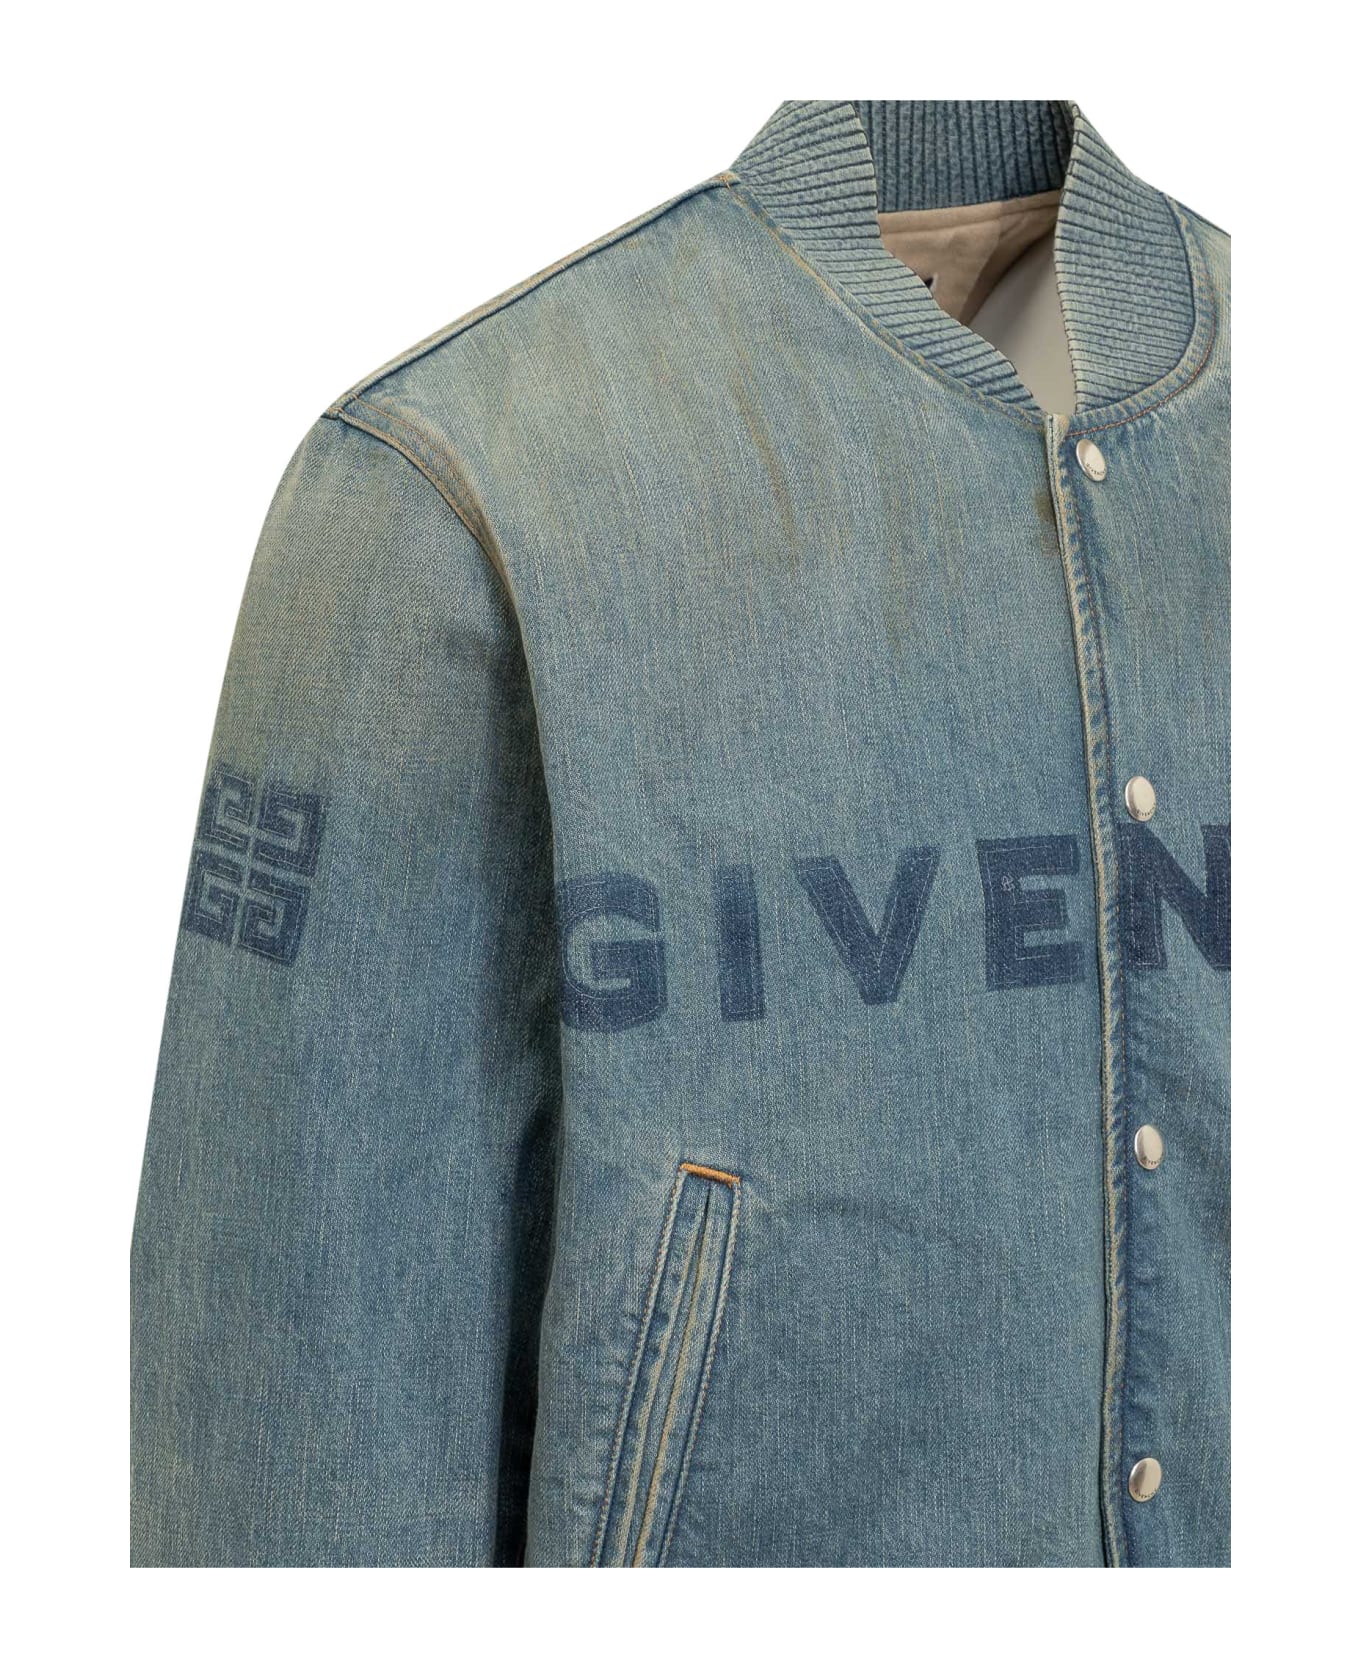 Givenchy Denim Jacket With Logo - Blue